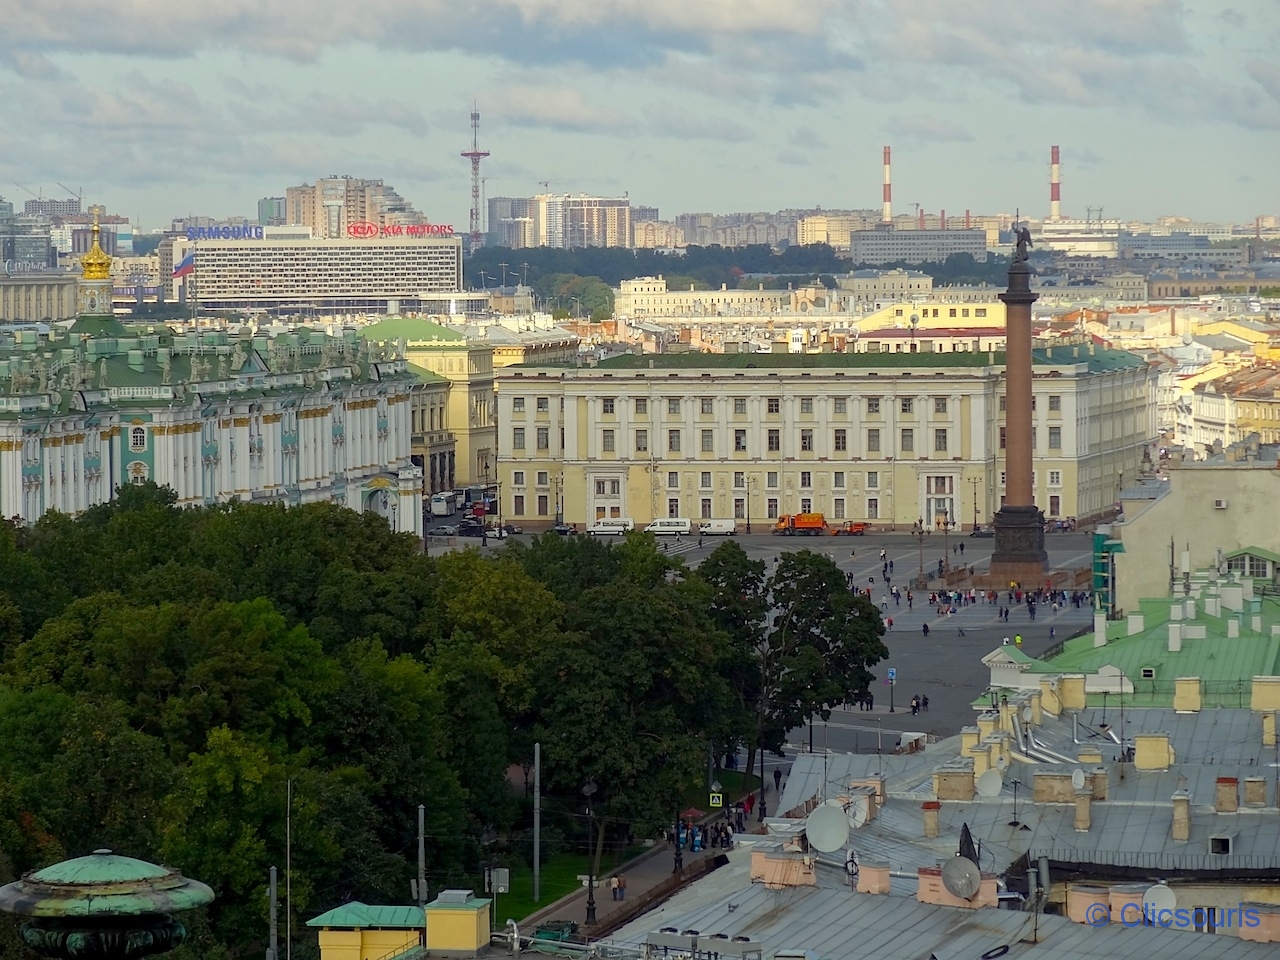 Saint-Pétersbourg Saint-Isaac vue